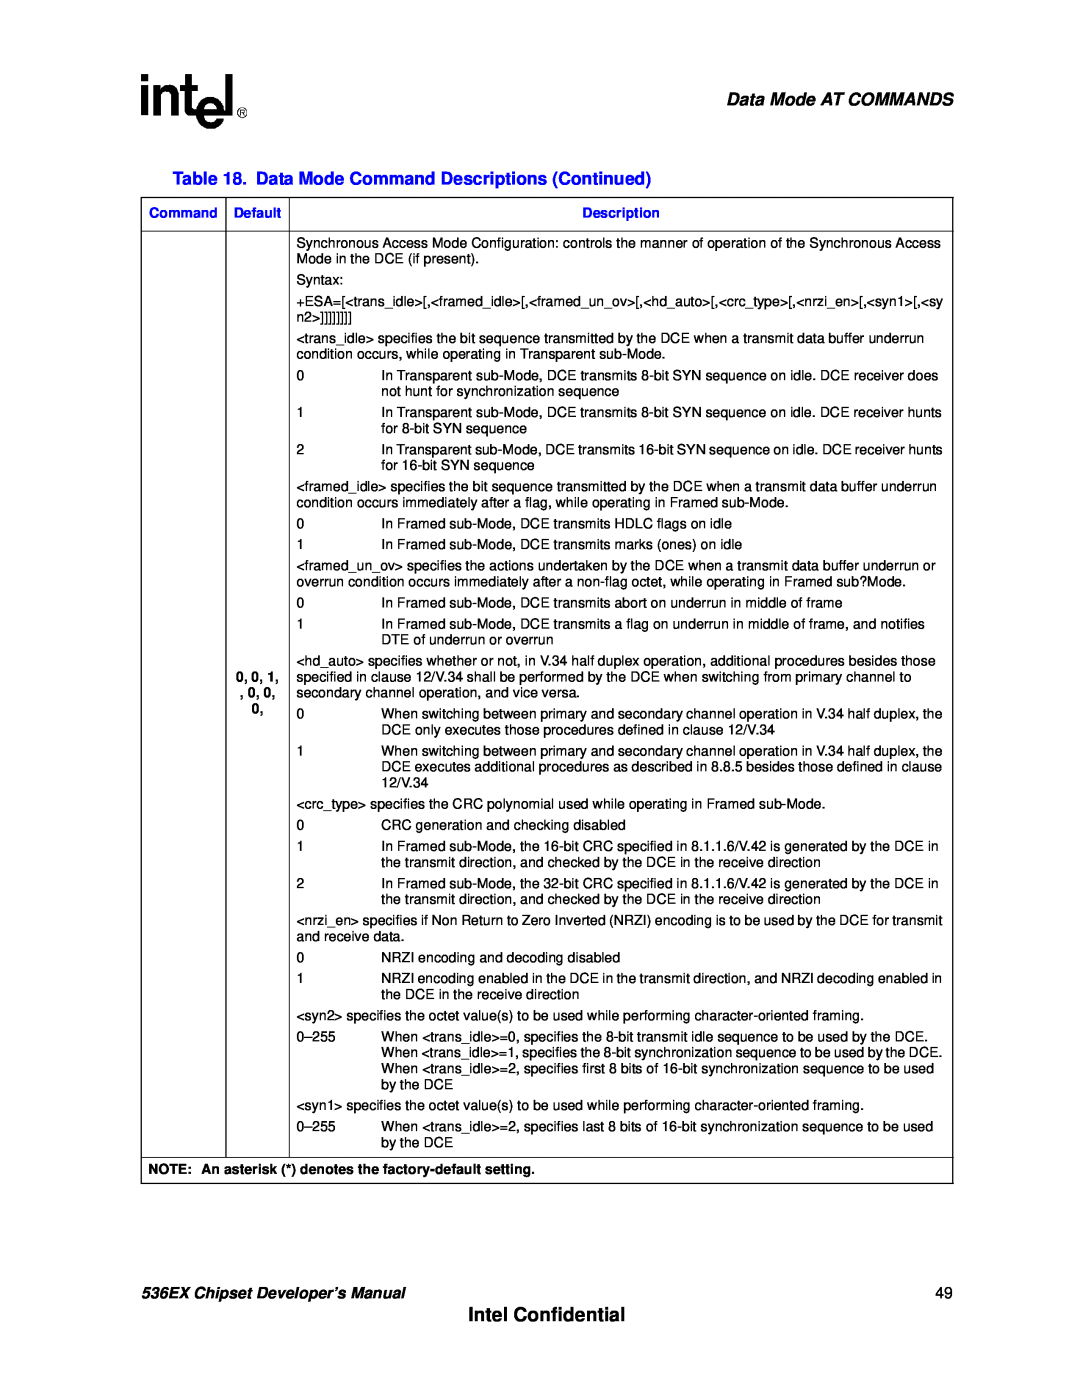 Intel 537EX manual Intel Confidential, Data Mode AT COMMANDS, 536EX Chipset Developer’s Manual 